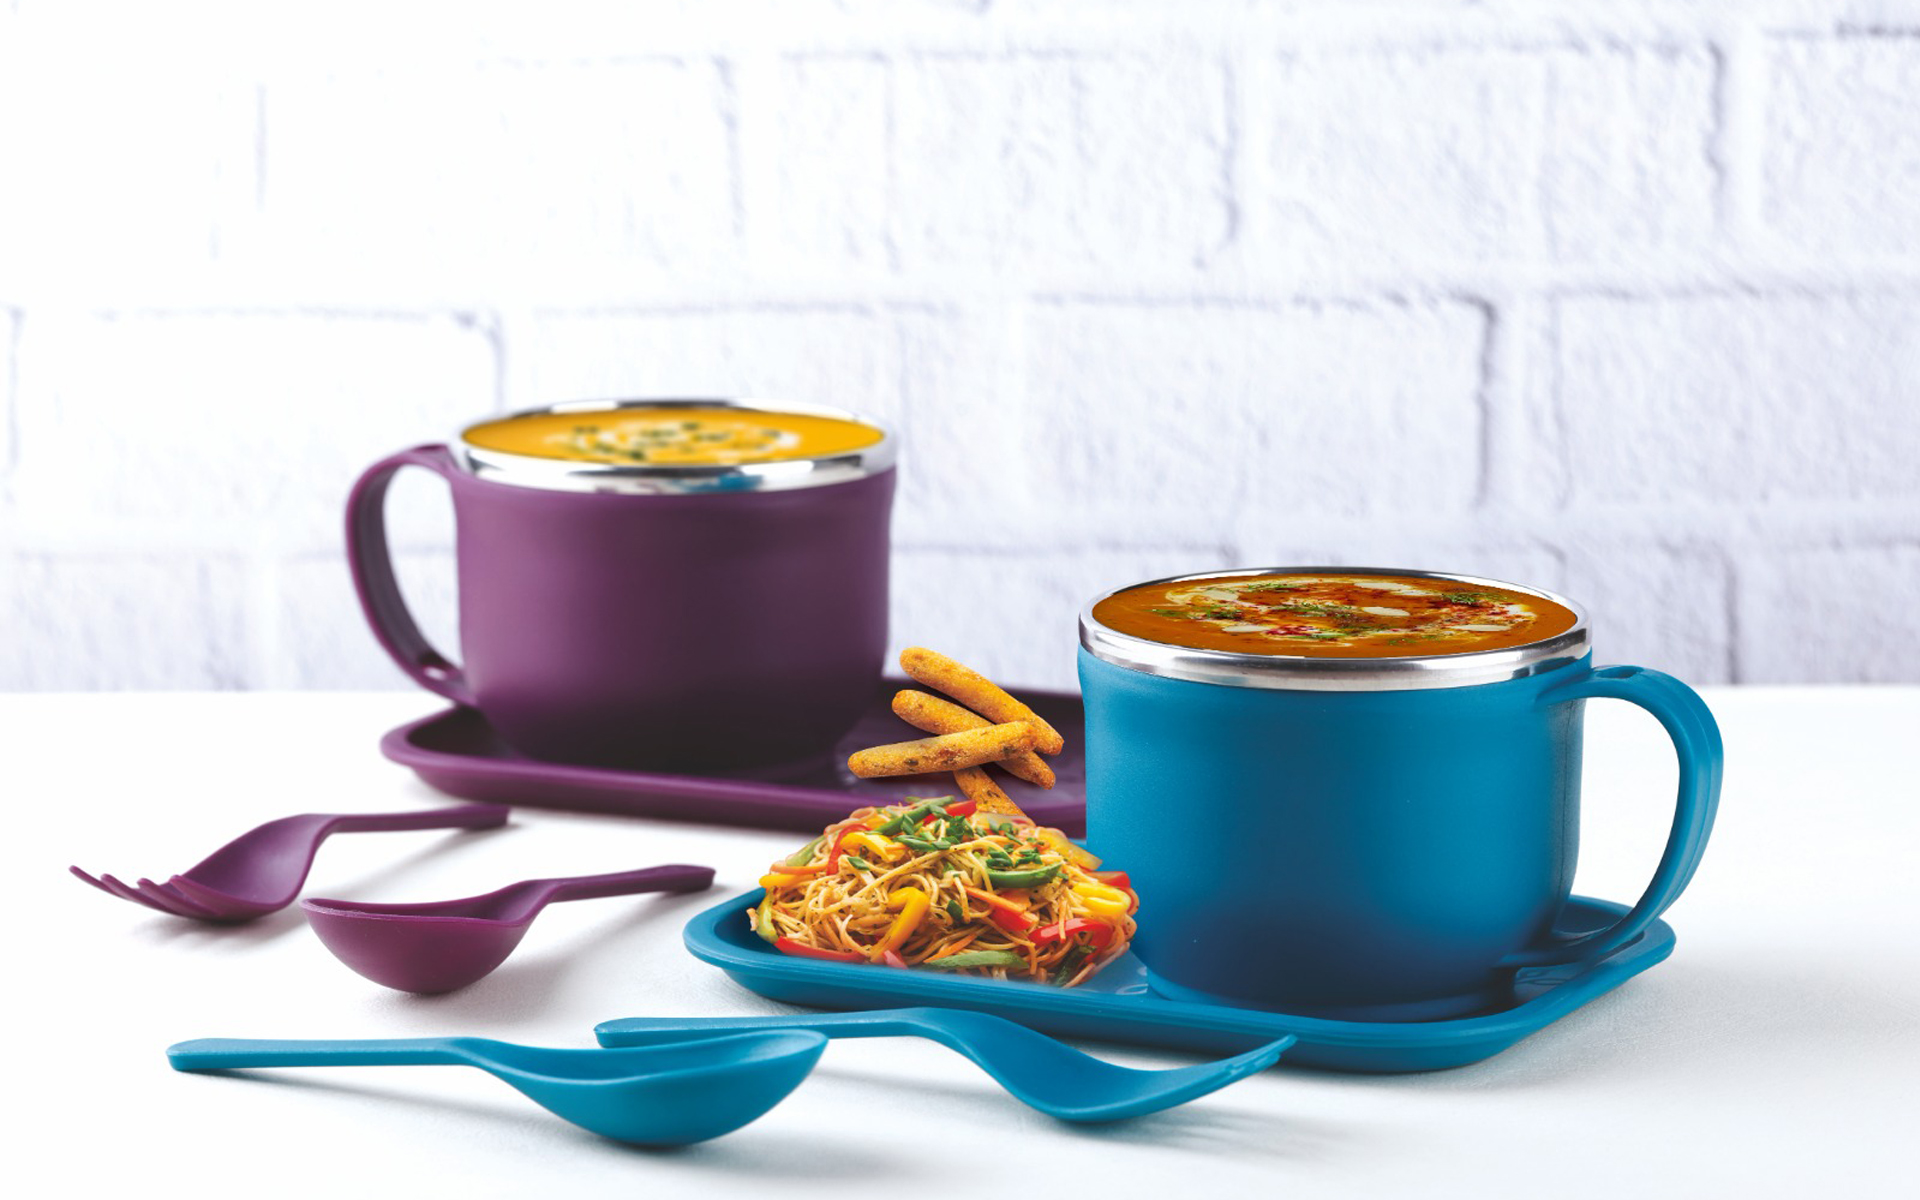  Nestwell Kitchenware Products